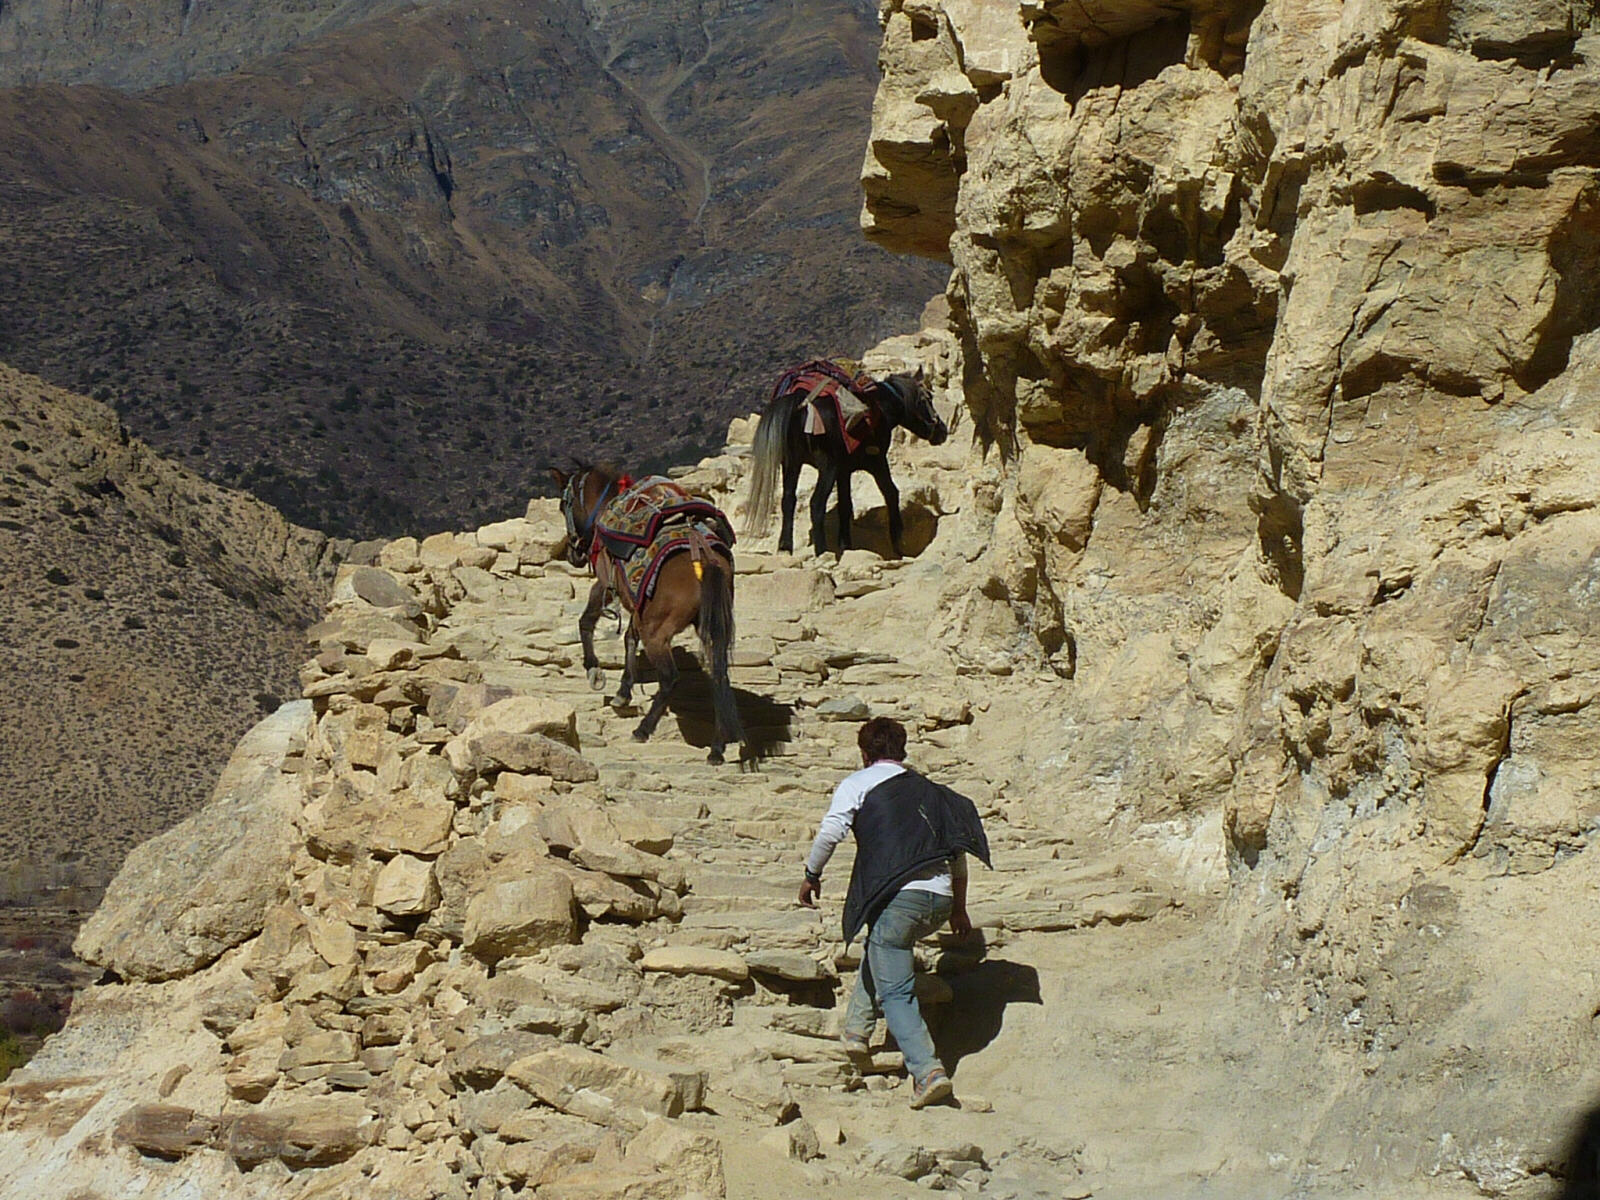 Uphill struggle between Chele and Syangboche, Nepal